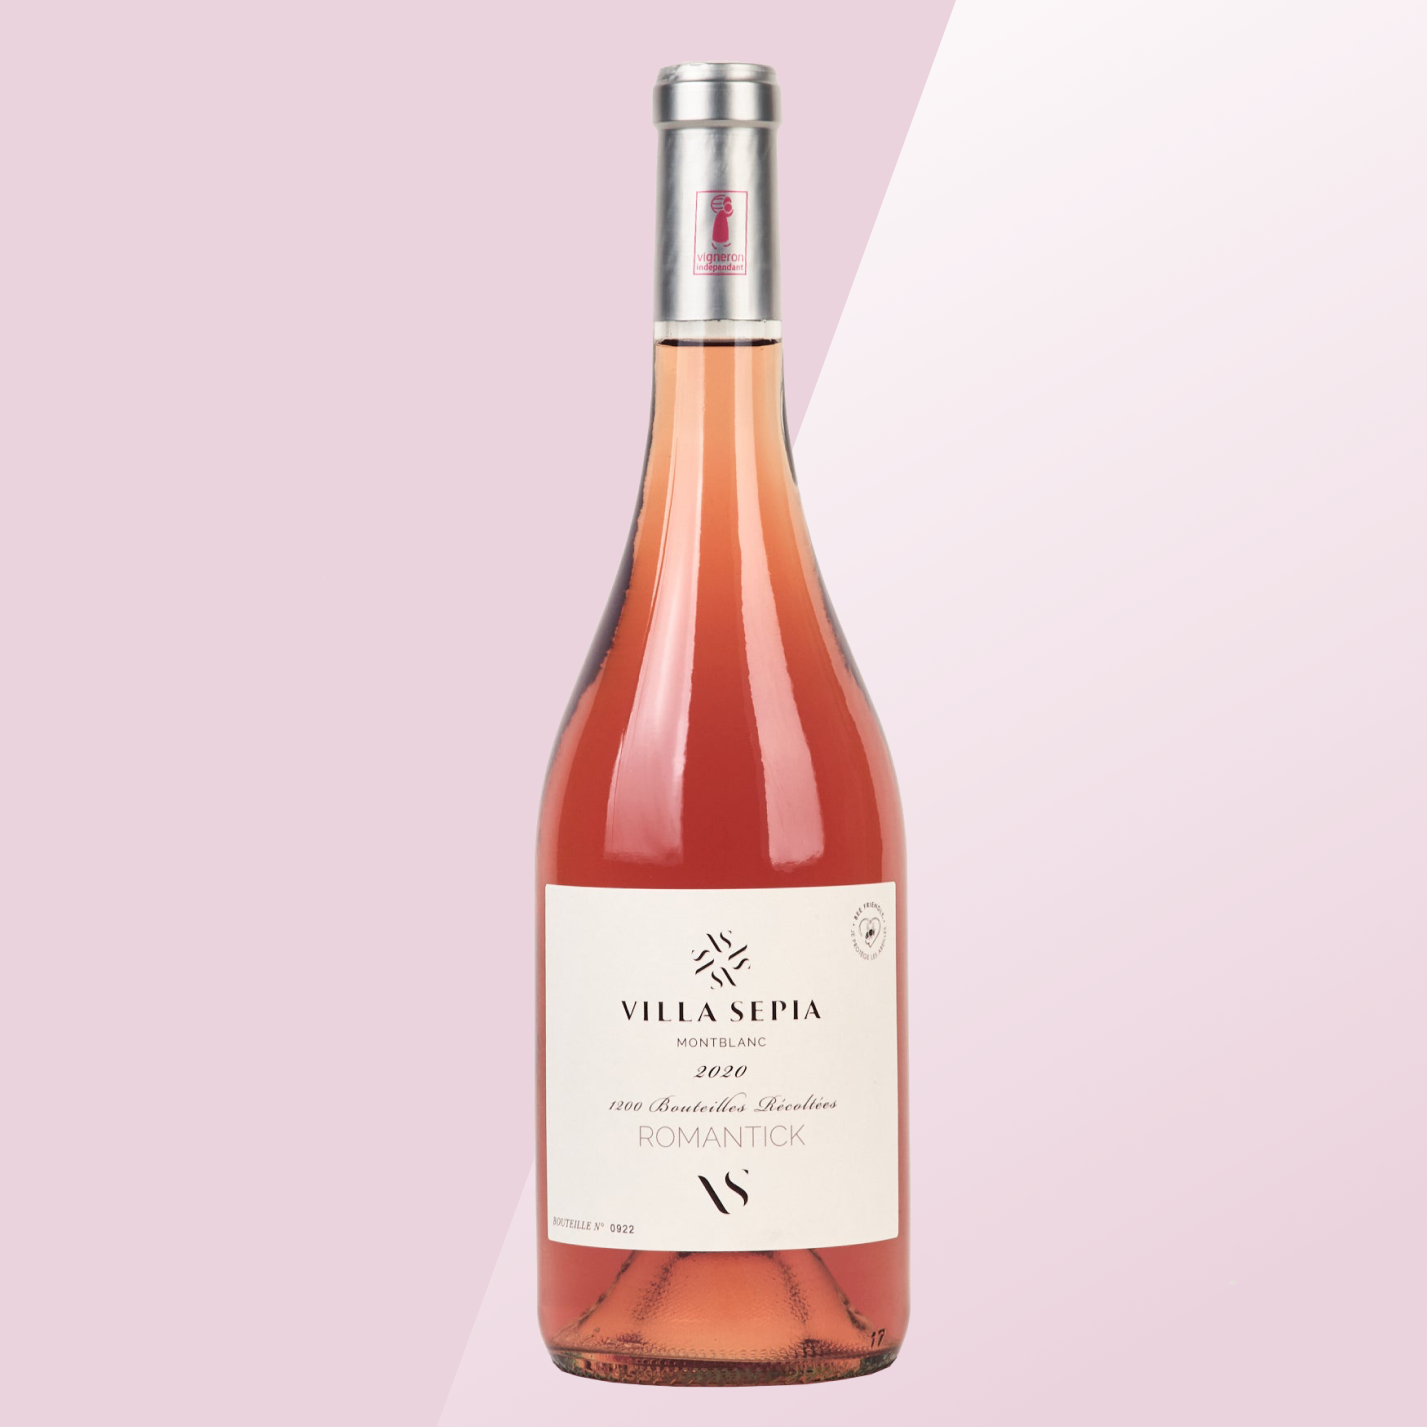 La Villa Sepia - 'Romantick' Grenache Rosé 2021 Vin Naturel